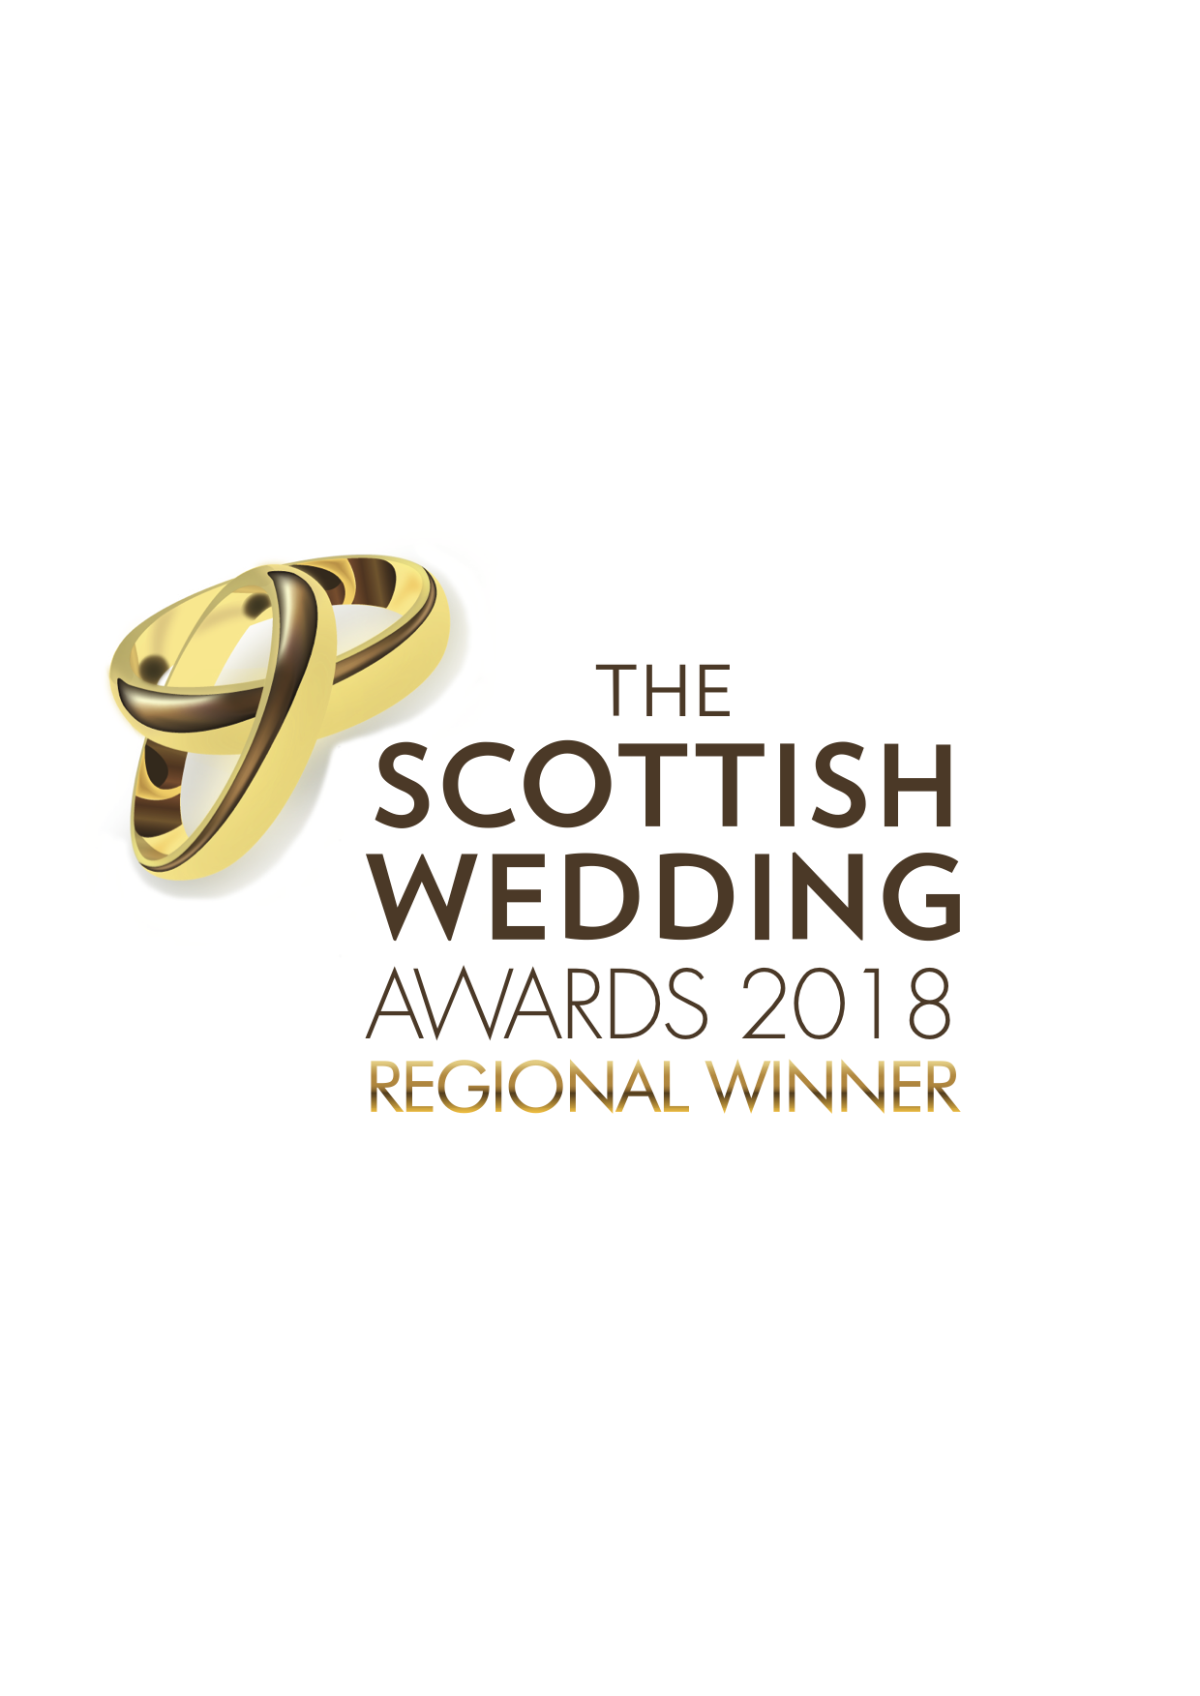 Scottish wedding awards Regional winner 2018